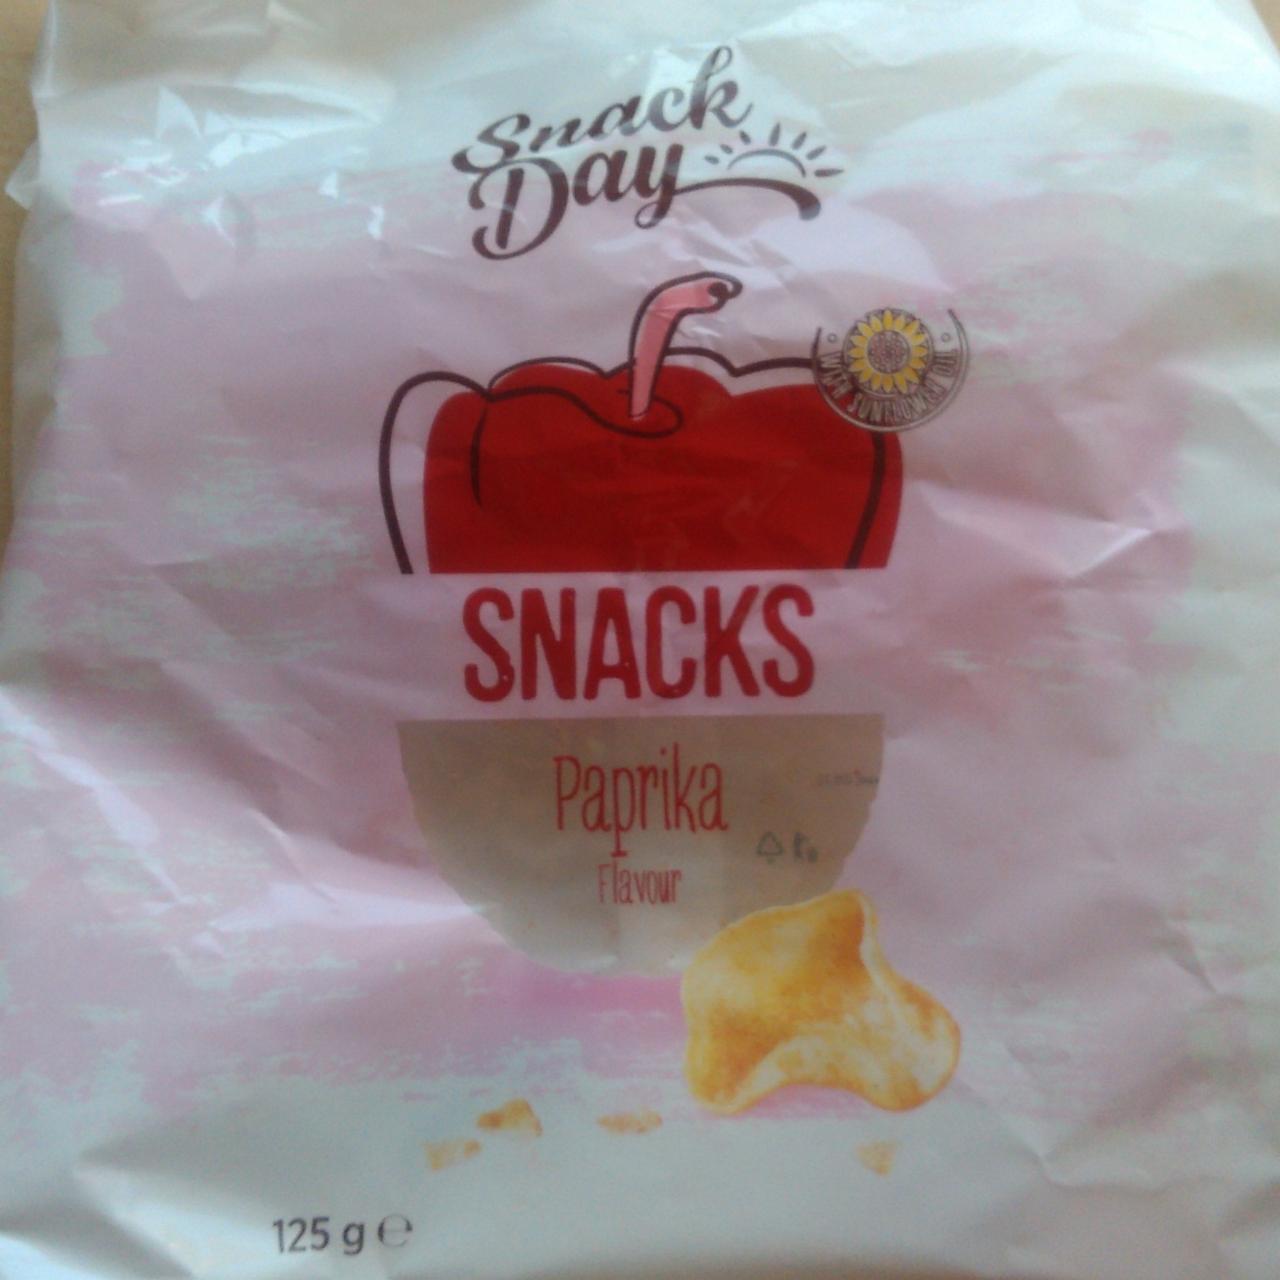 Fotografie - Snacks Paprika flavour Snack Day